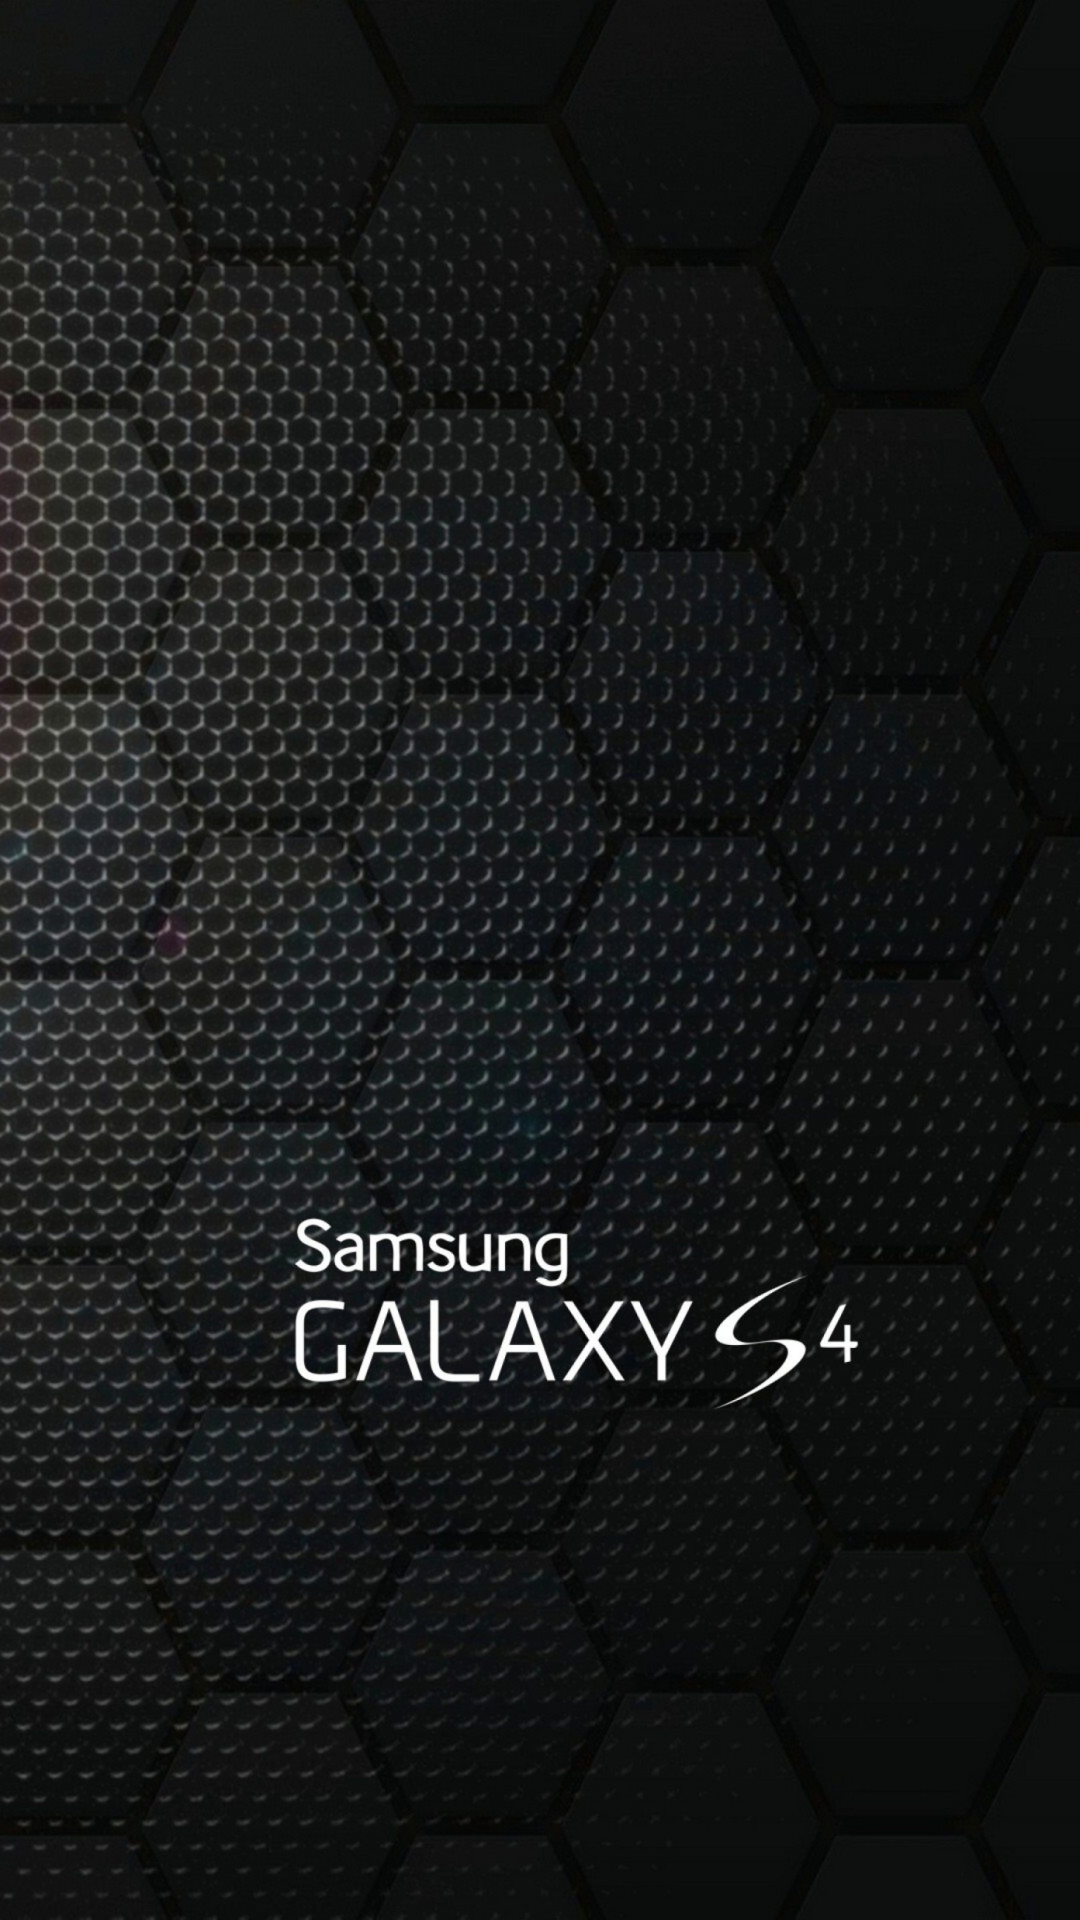 Sfondi Samsung S4 1080x1920